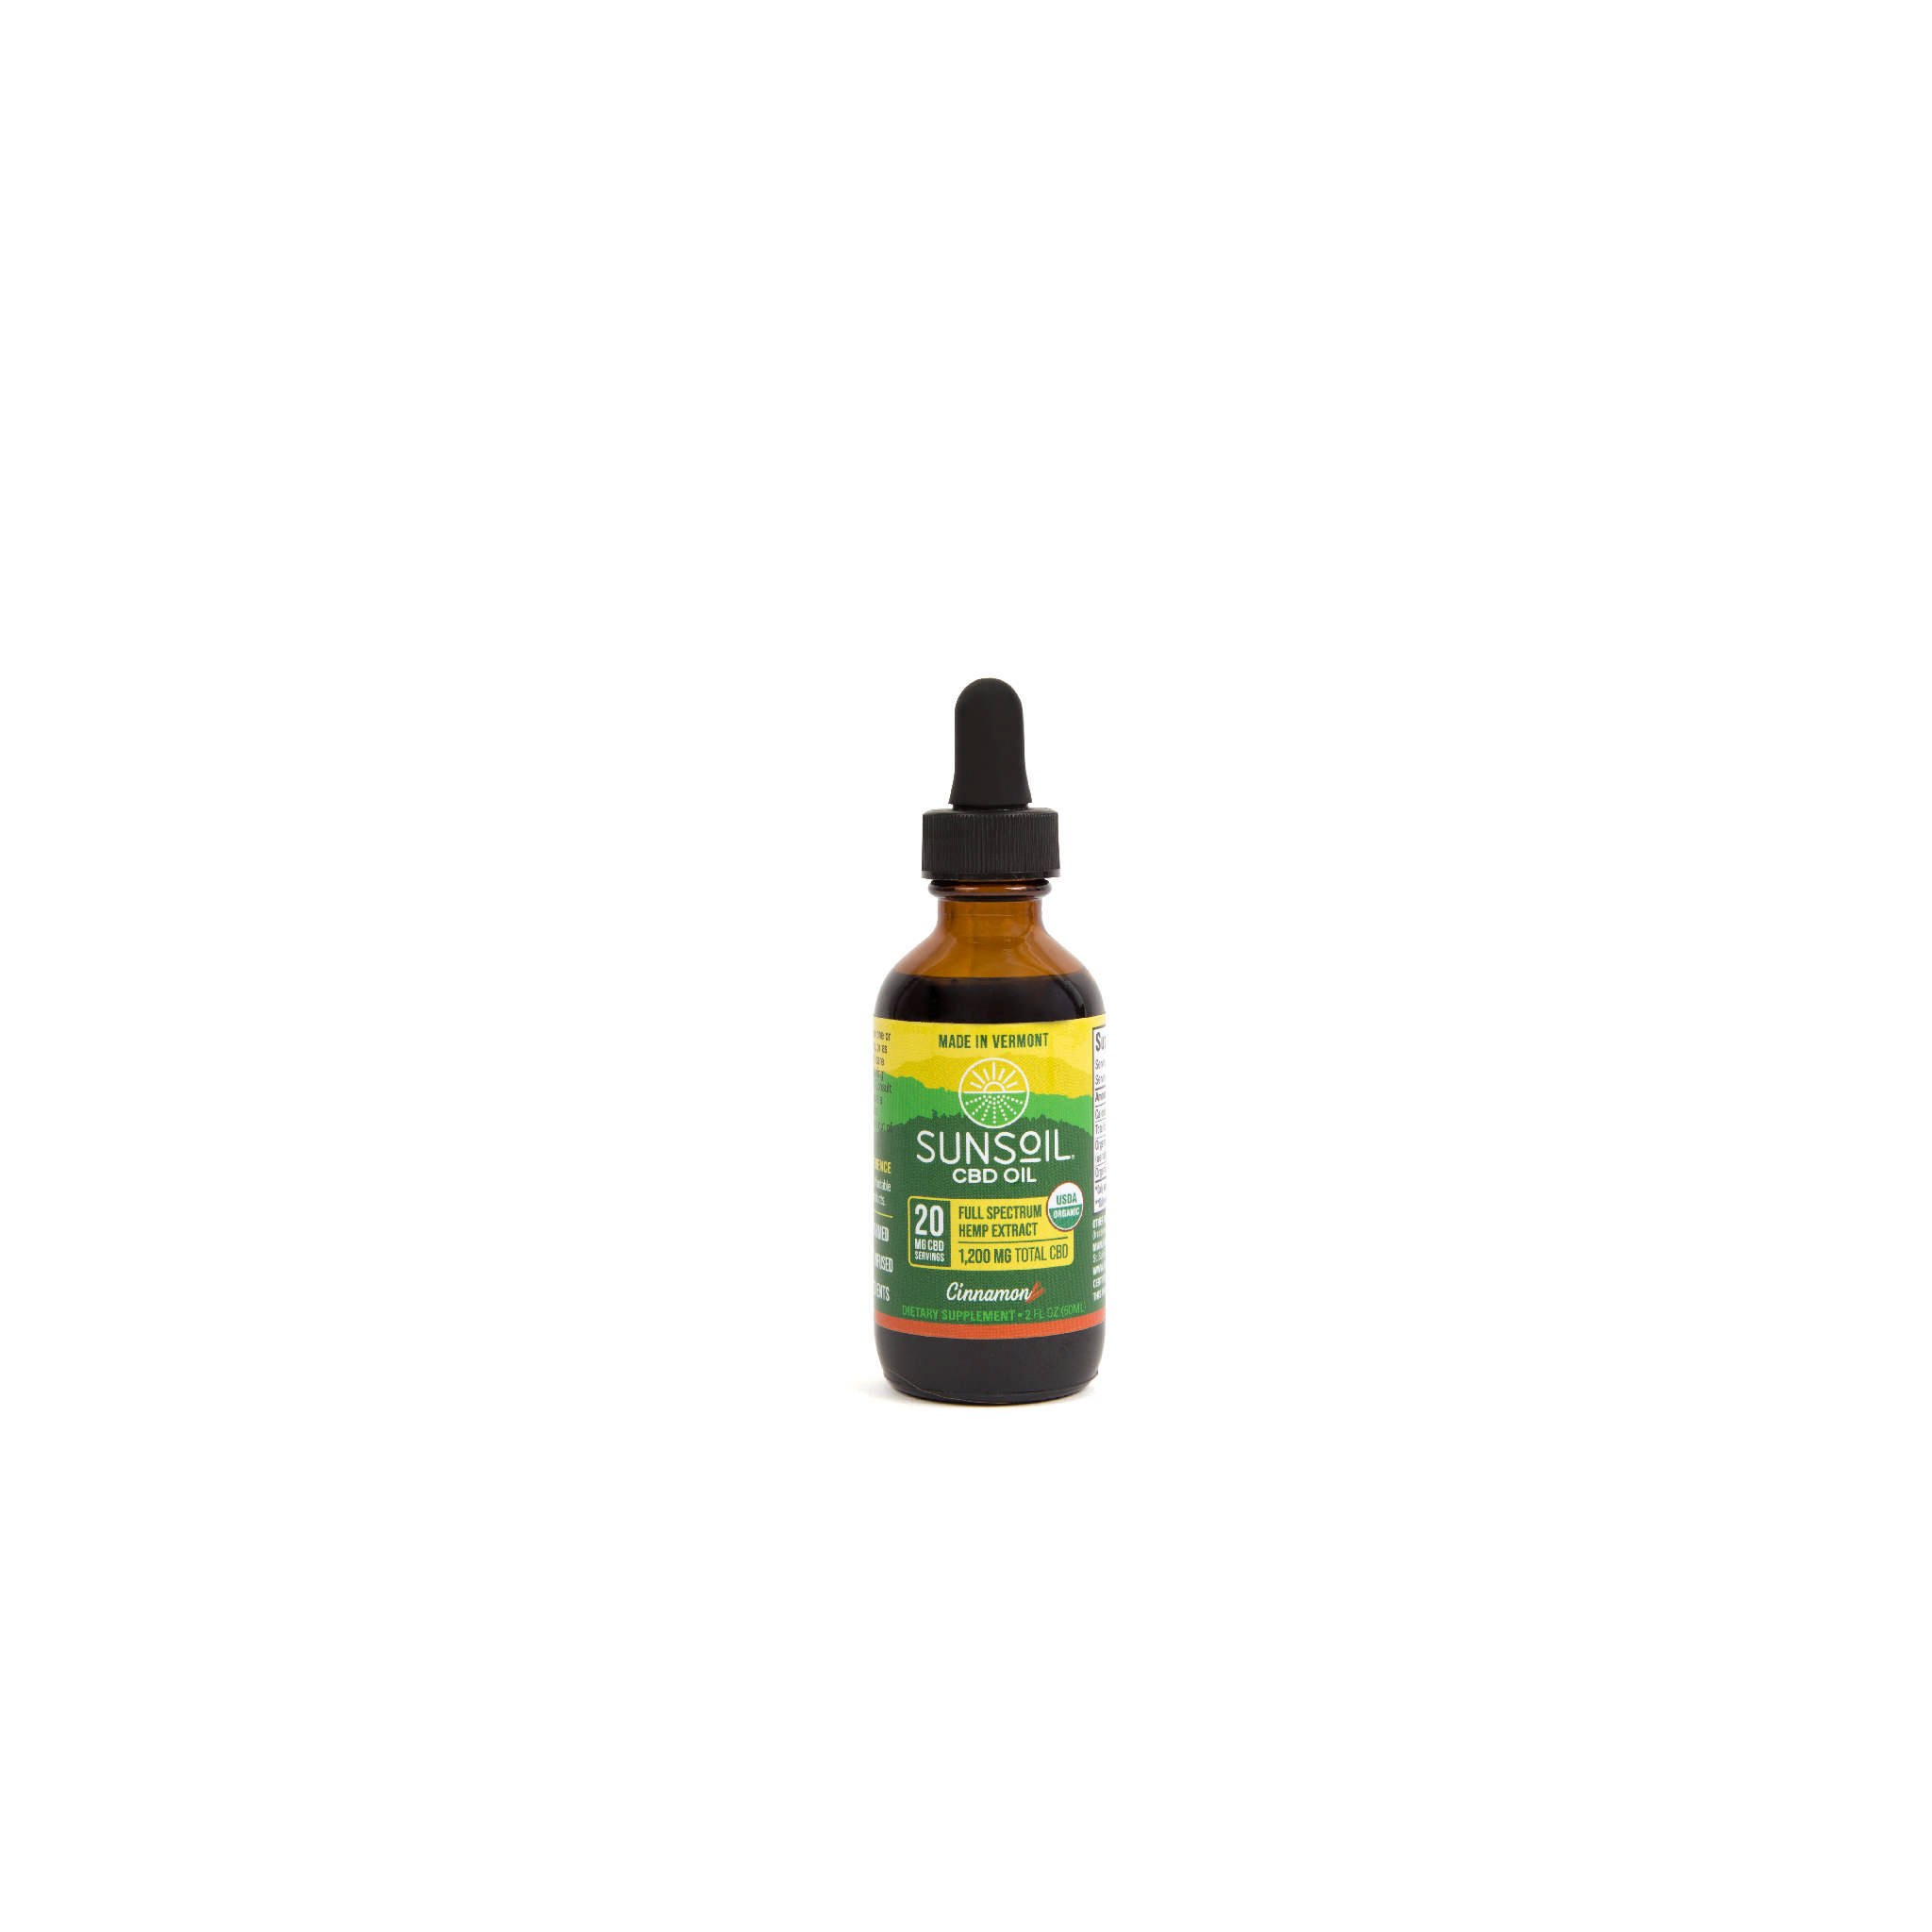 Sunsoil CBD Oil - Cbd Oil 20 mg Cinnamon